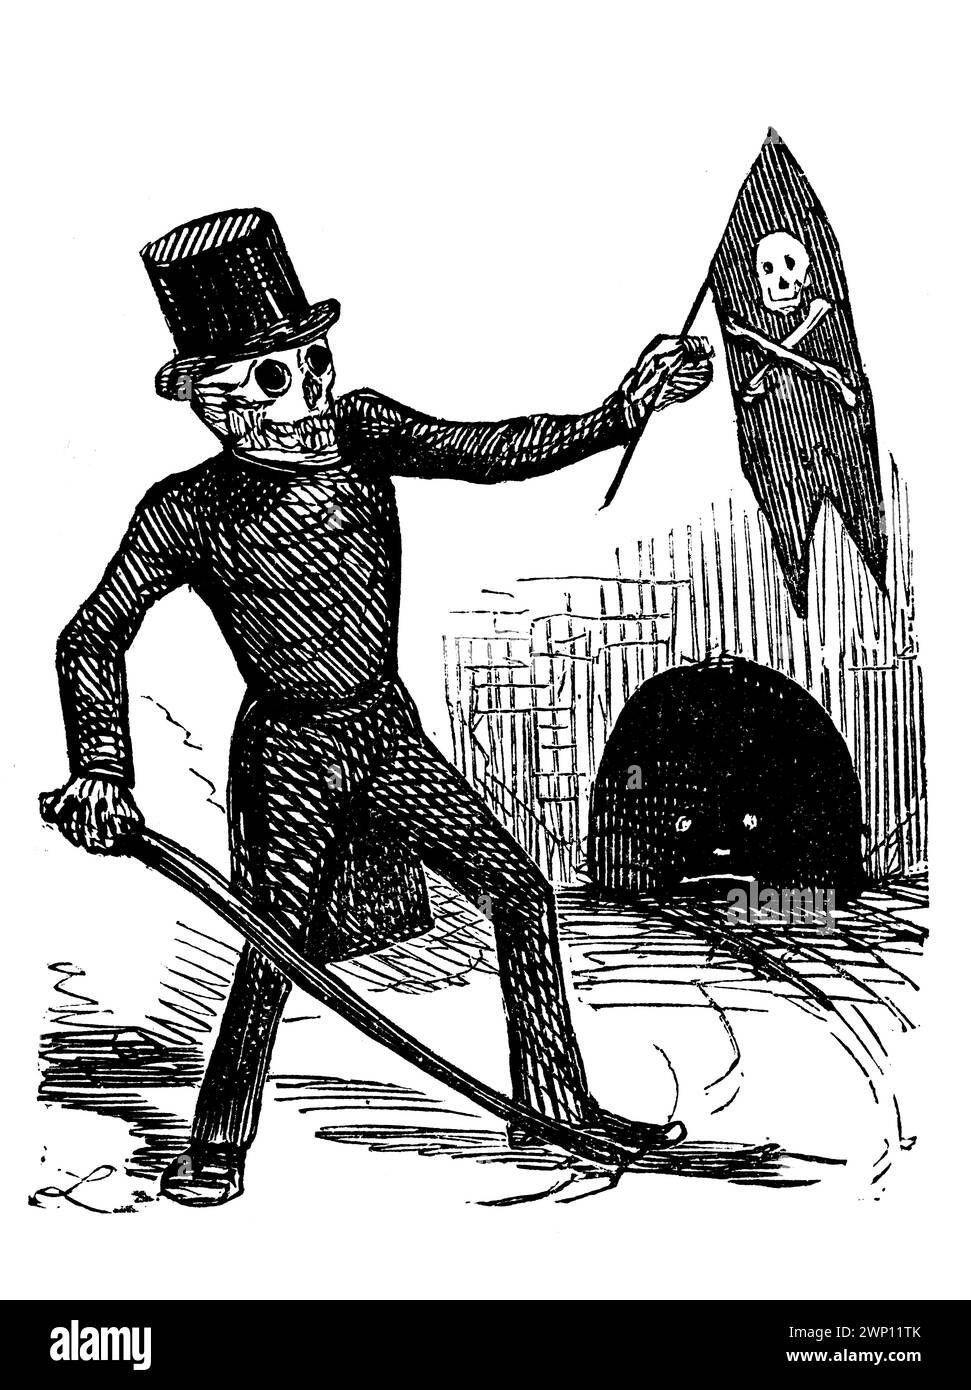 Walking the Railways, cartoon with skeleton waving skull and crossbones flag indicating danger of train tracks, from 1852 Punch Magazine Stock Photo